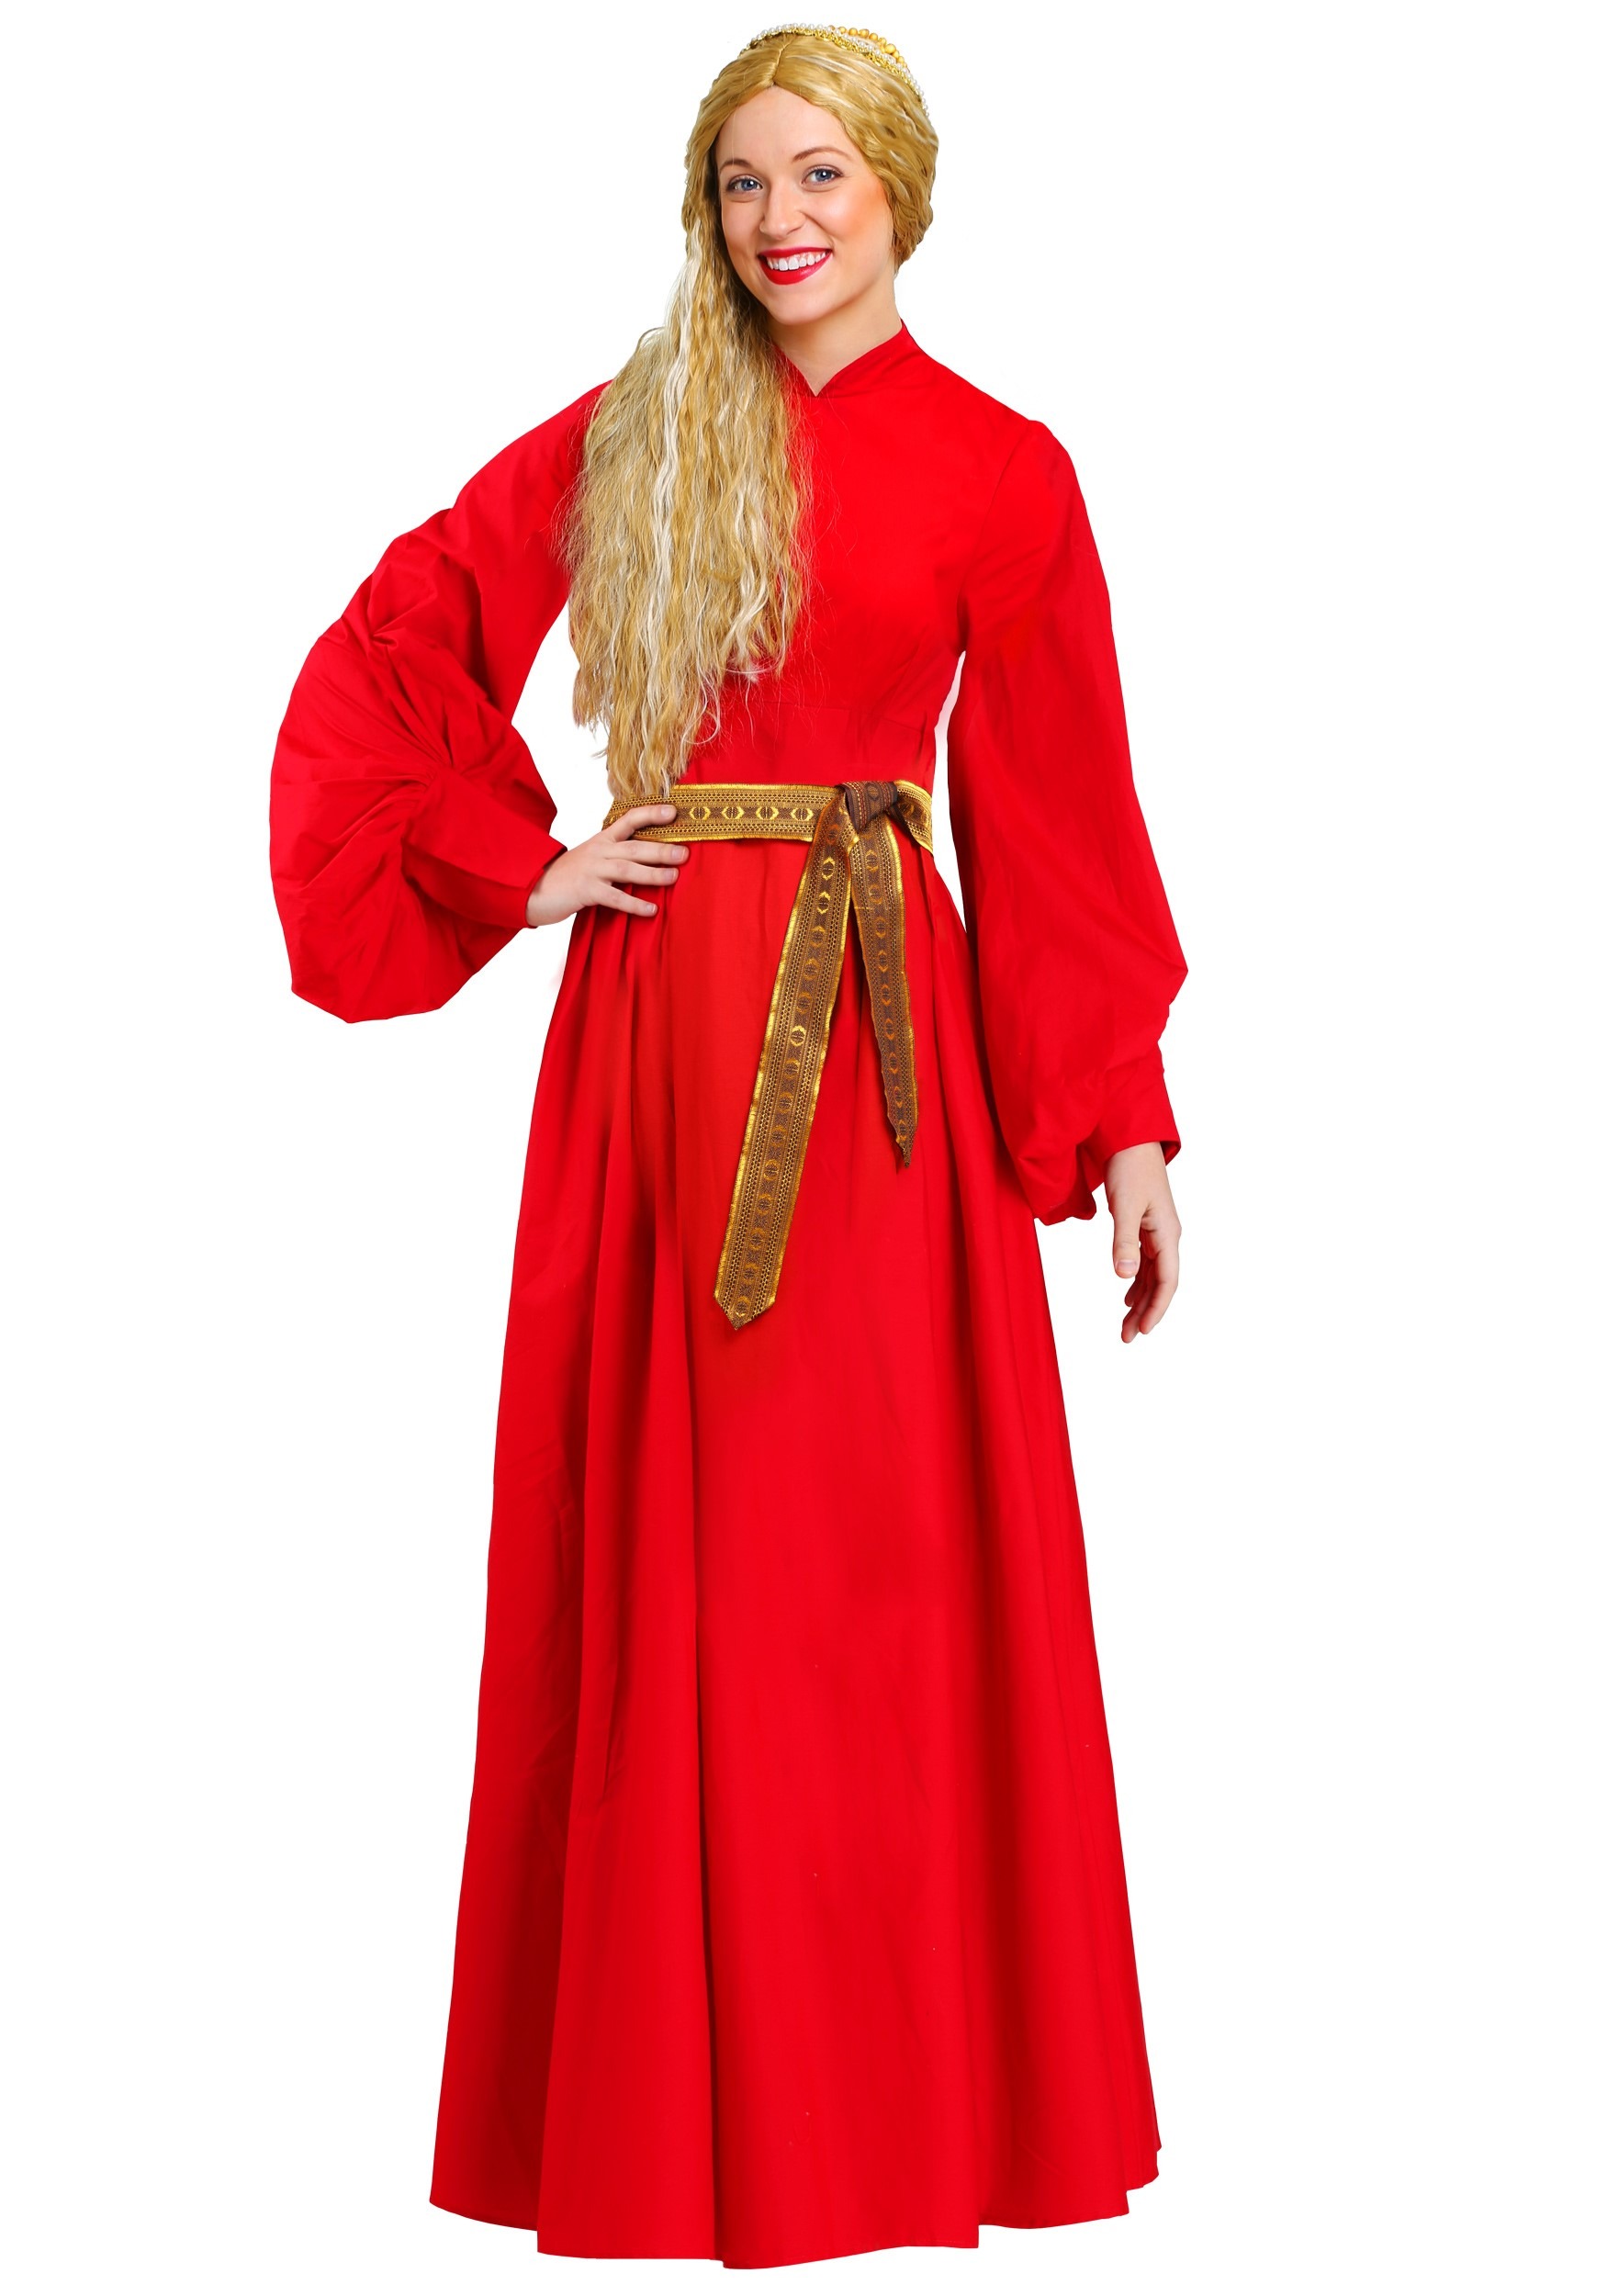 Buttercup Peasant Dress Plus Size Costume